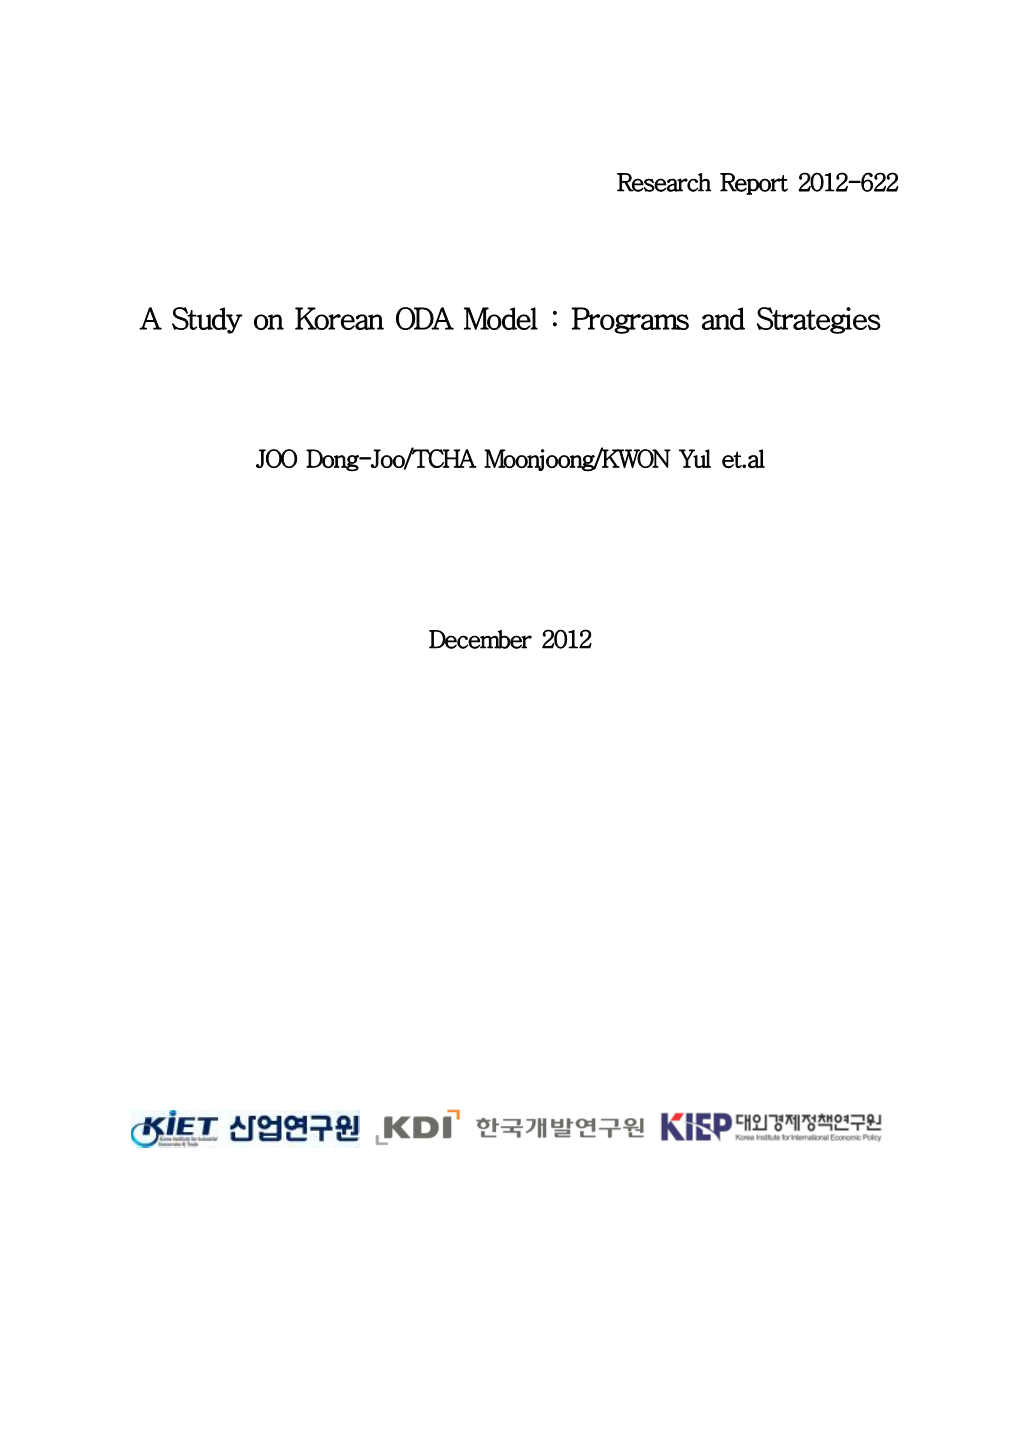 A Study on Korean ODA Model : Programs and Strategies